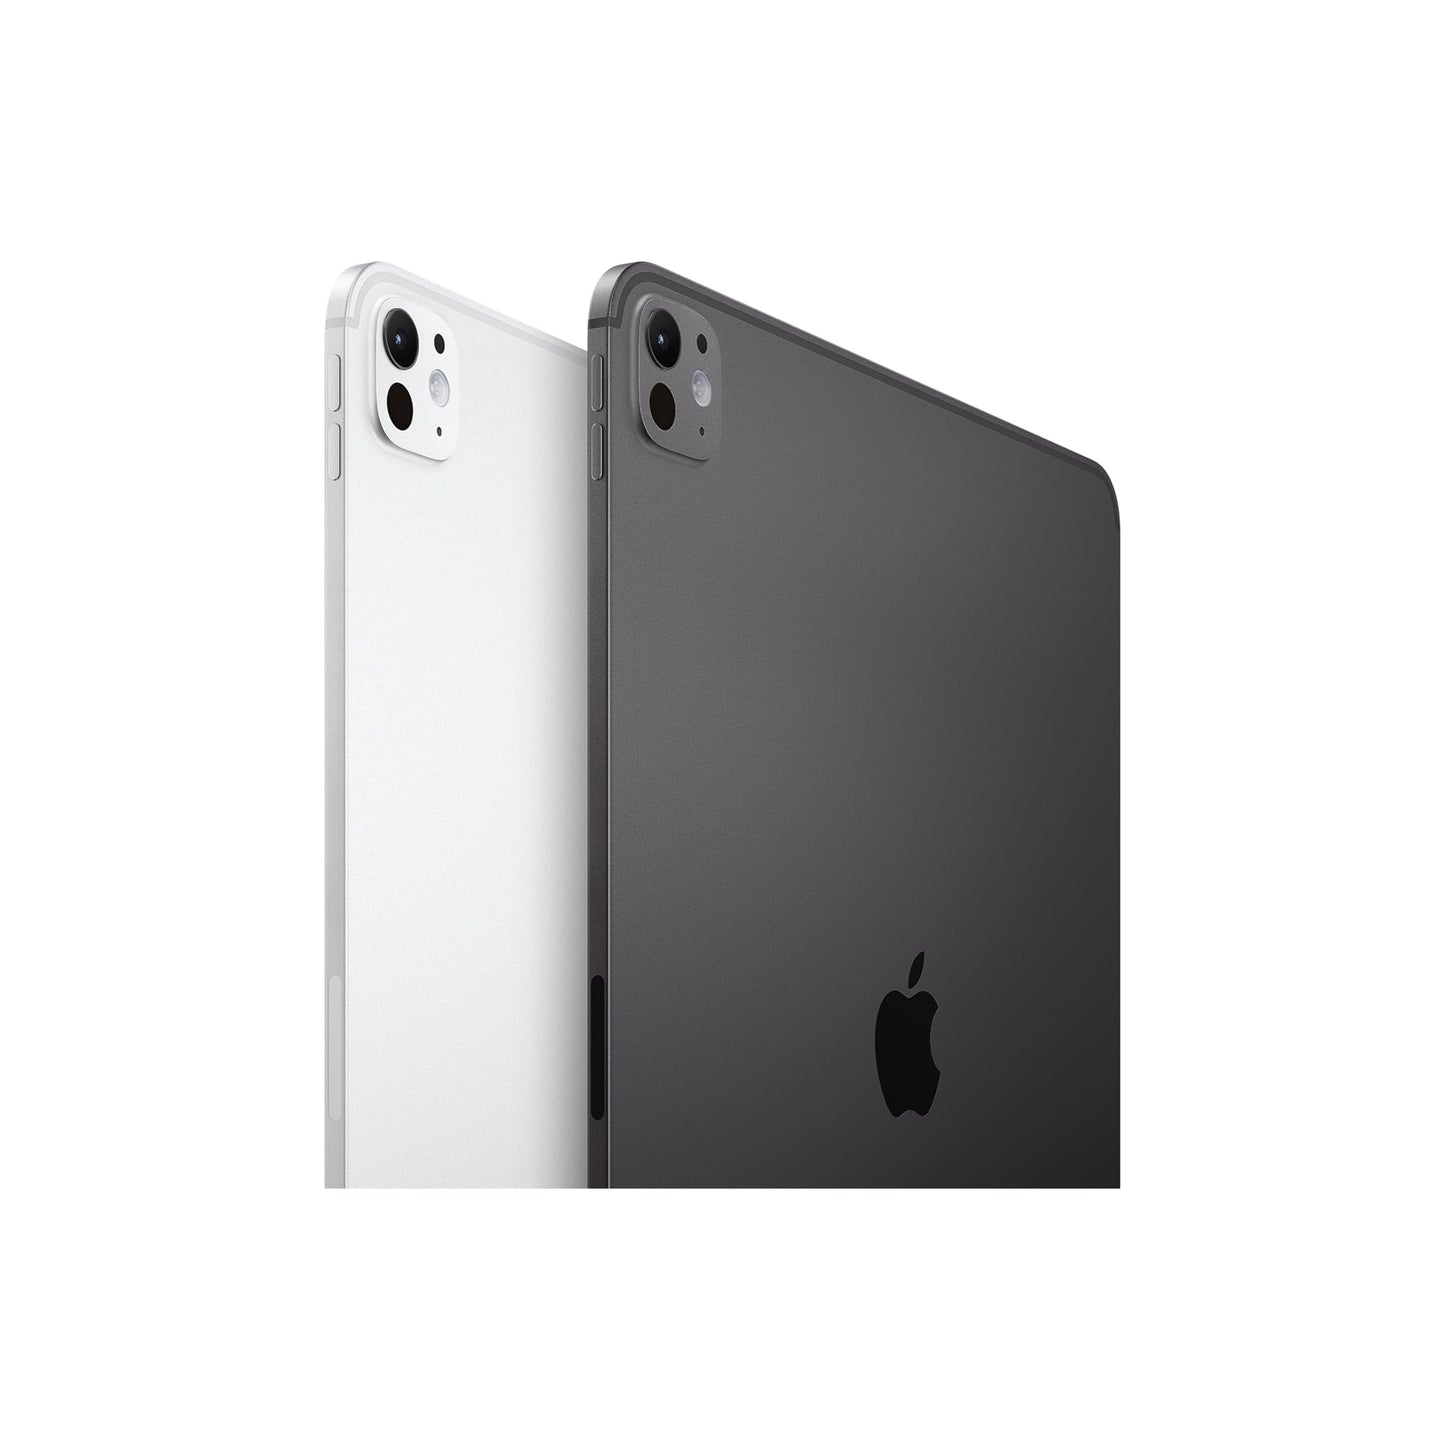 Apple iPad Pro 11 بوصة (M4): شاشة Ultra Retina XDR، 256 جيجابايت، كاميرا أمامية 12 ميجابكسل / كاميرا خلفية 12 ميجابكسل، ماسح ضوئي LiDAR، شبكة Wi-Fi 6E + 5G خلوية مع eSIM، معرف الوجه، عمر بطارية يدوم طوال اليوم - فضي